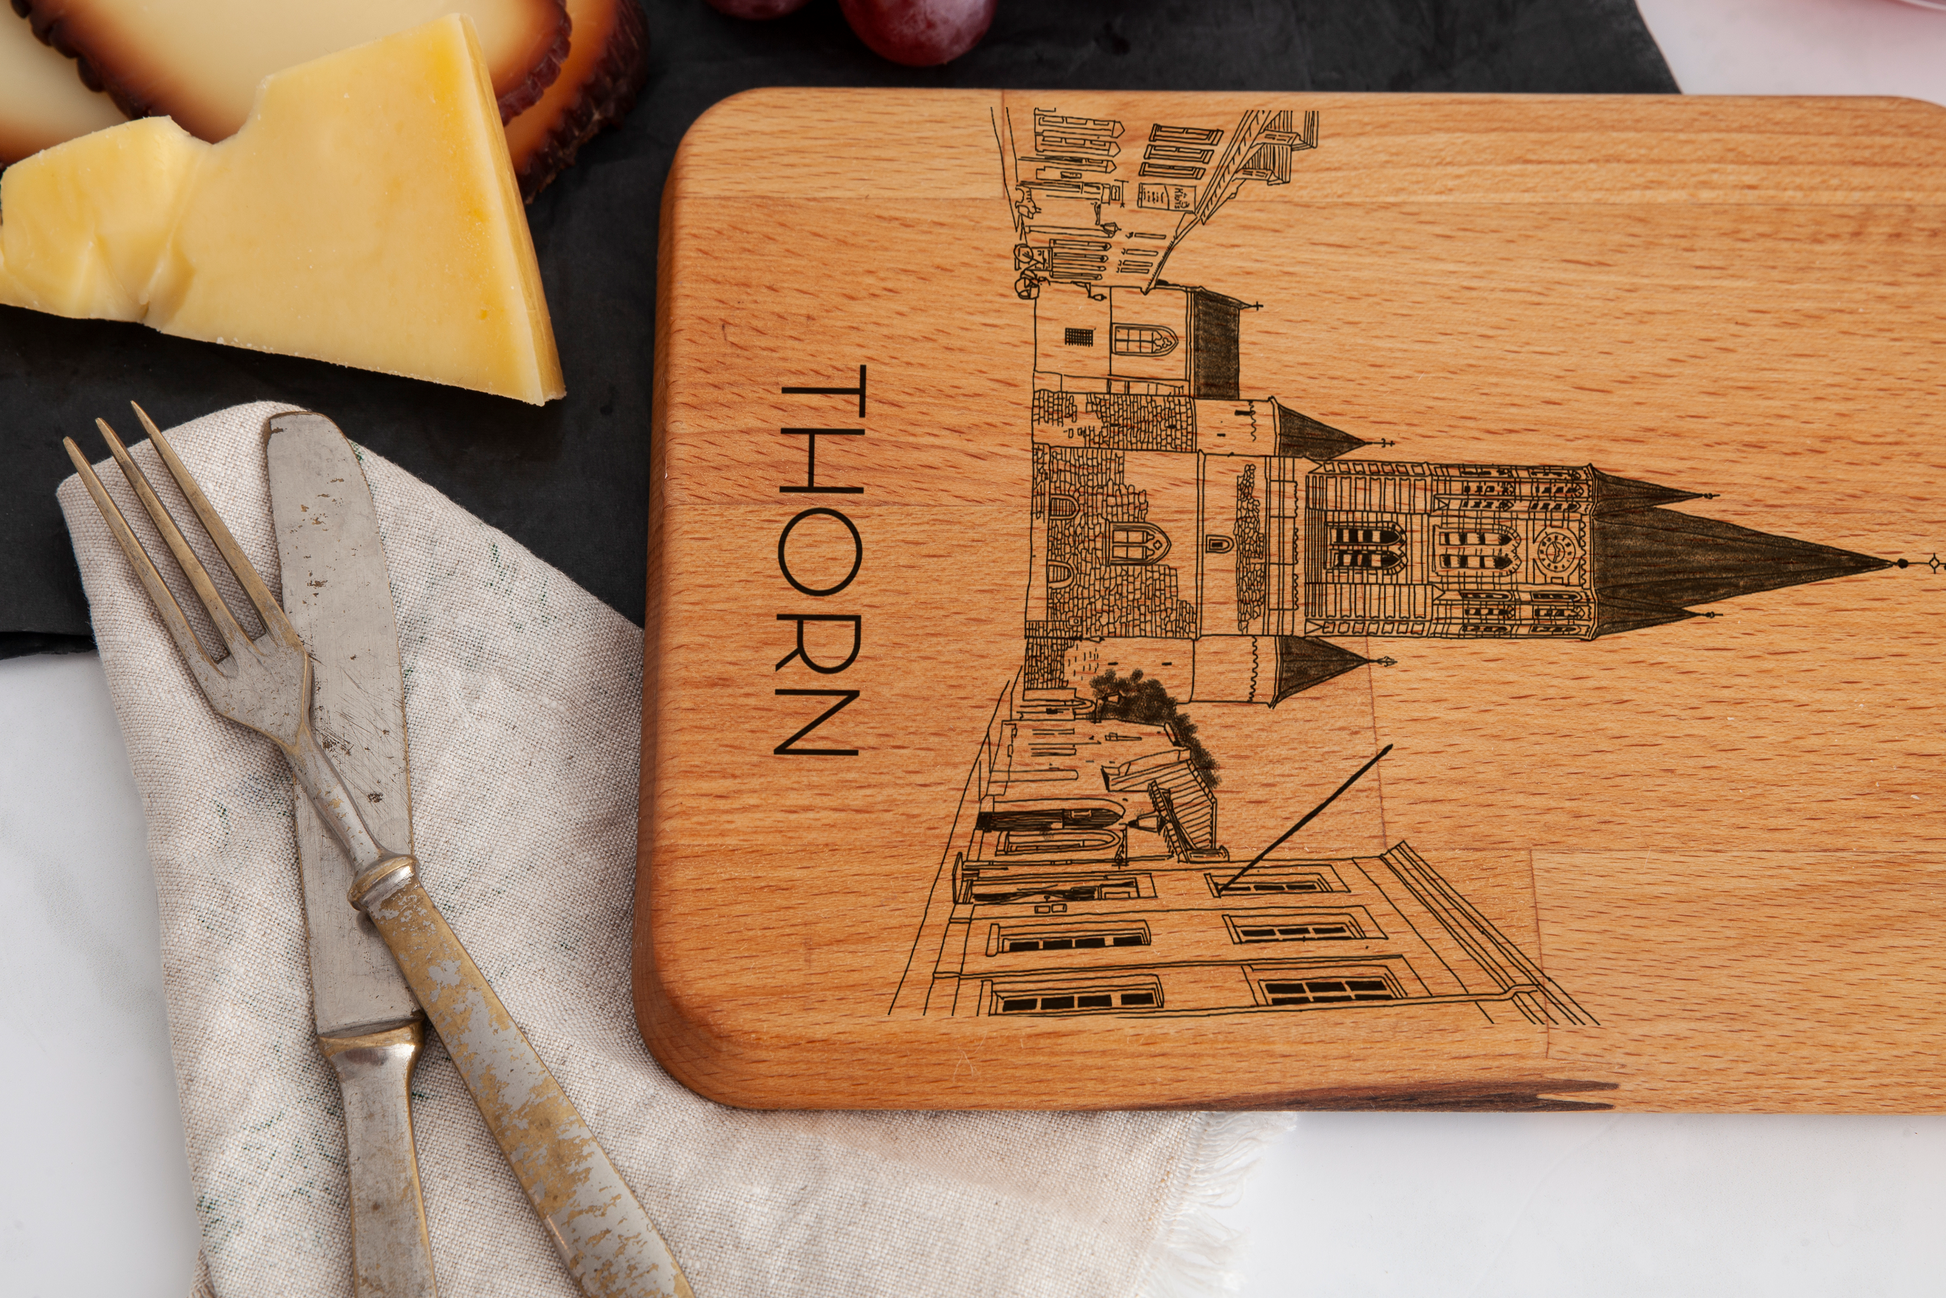 Thorn, Abdij Kerk, cheese board, wood grain